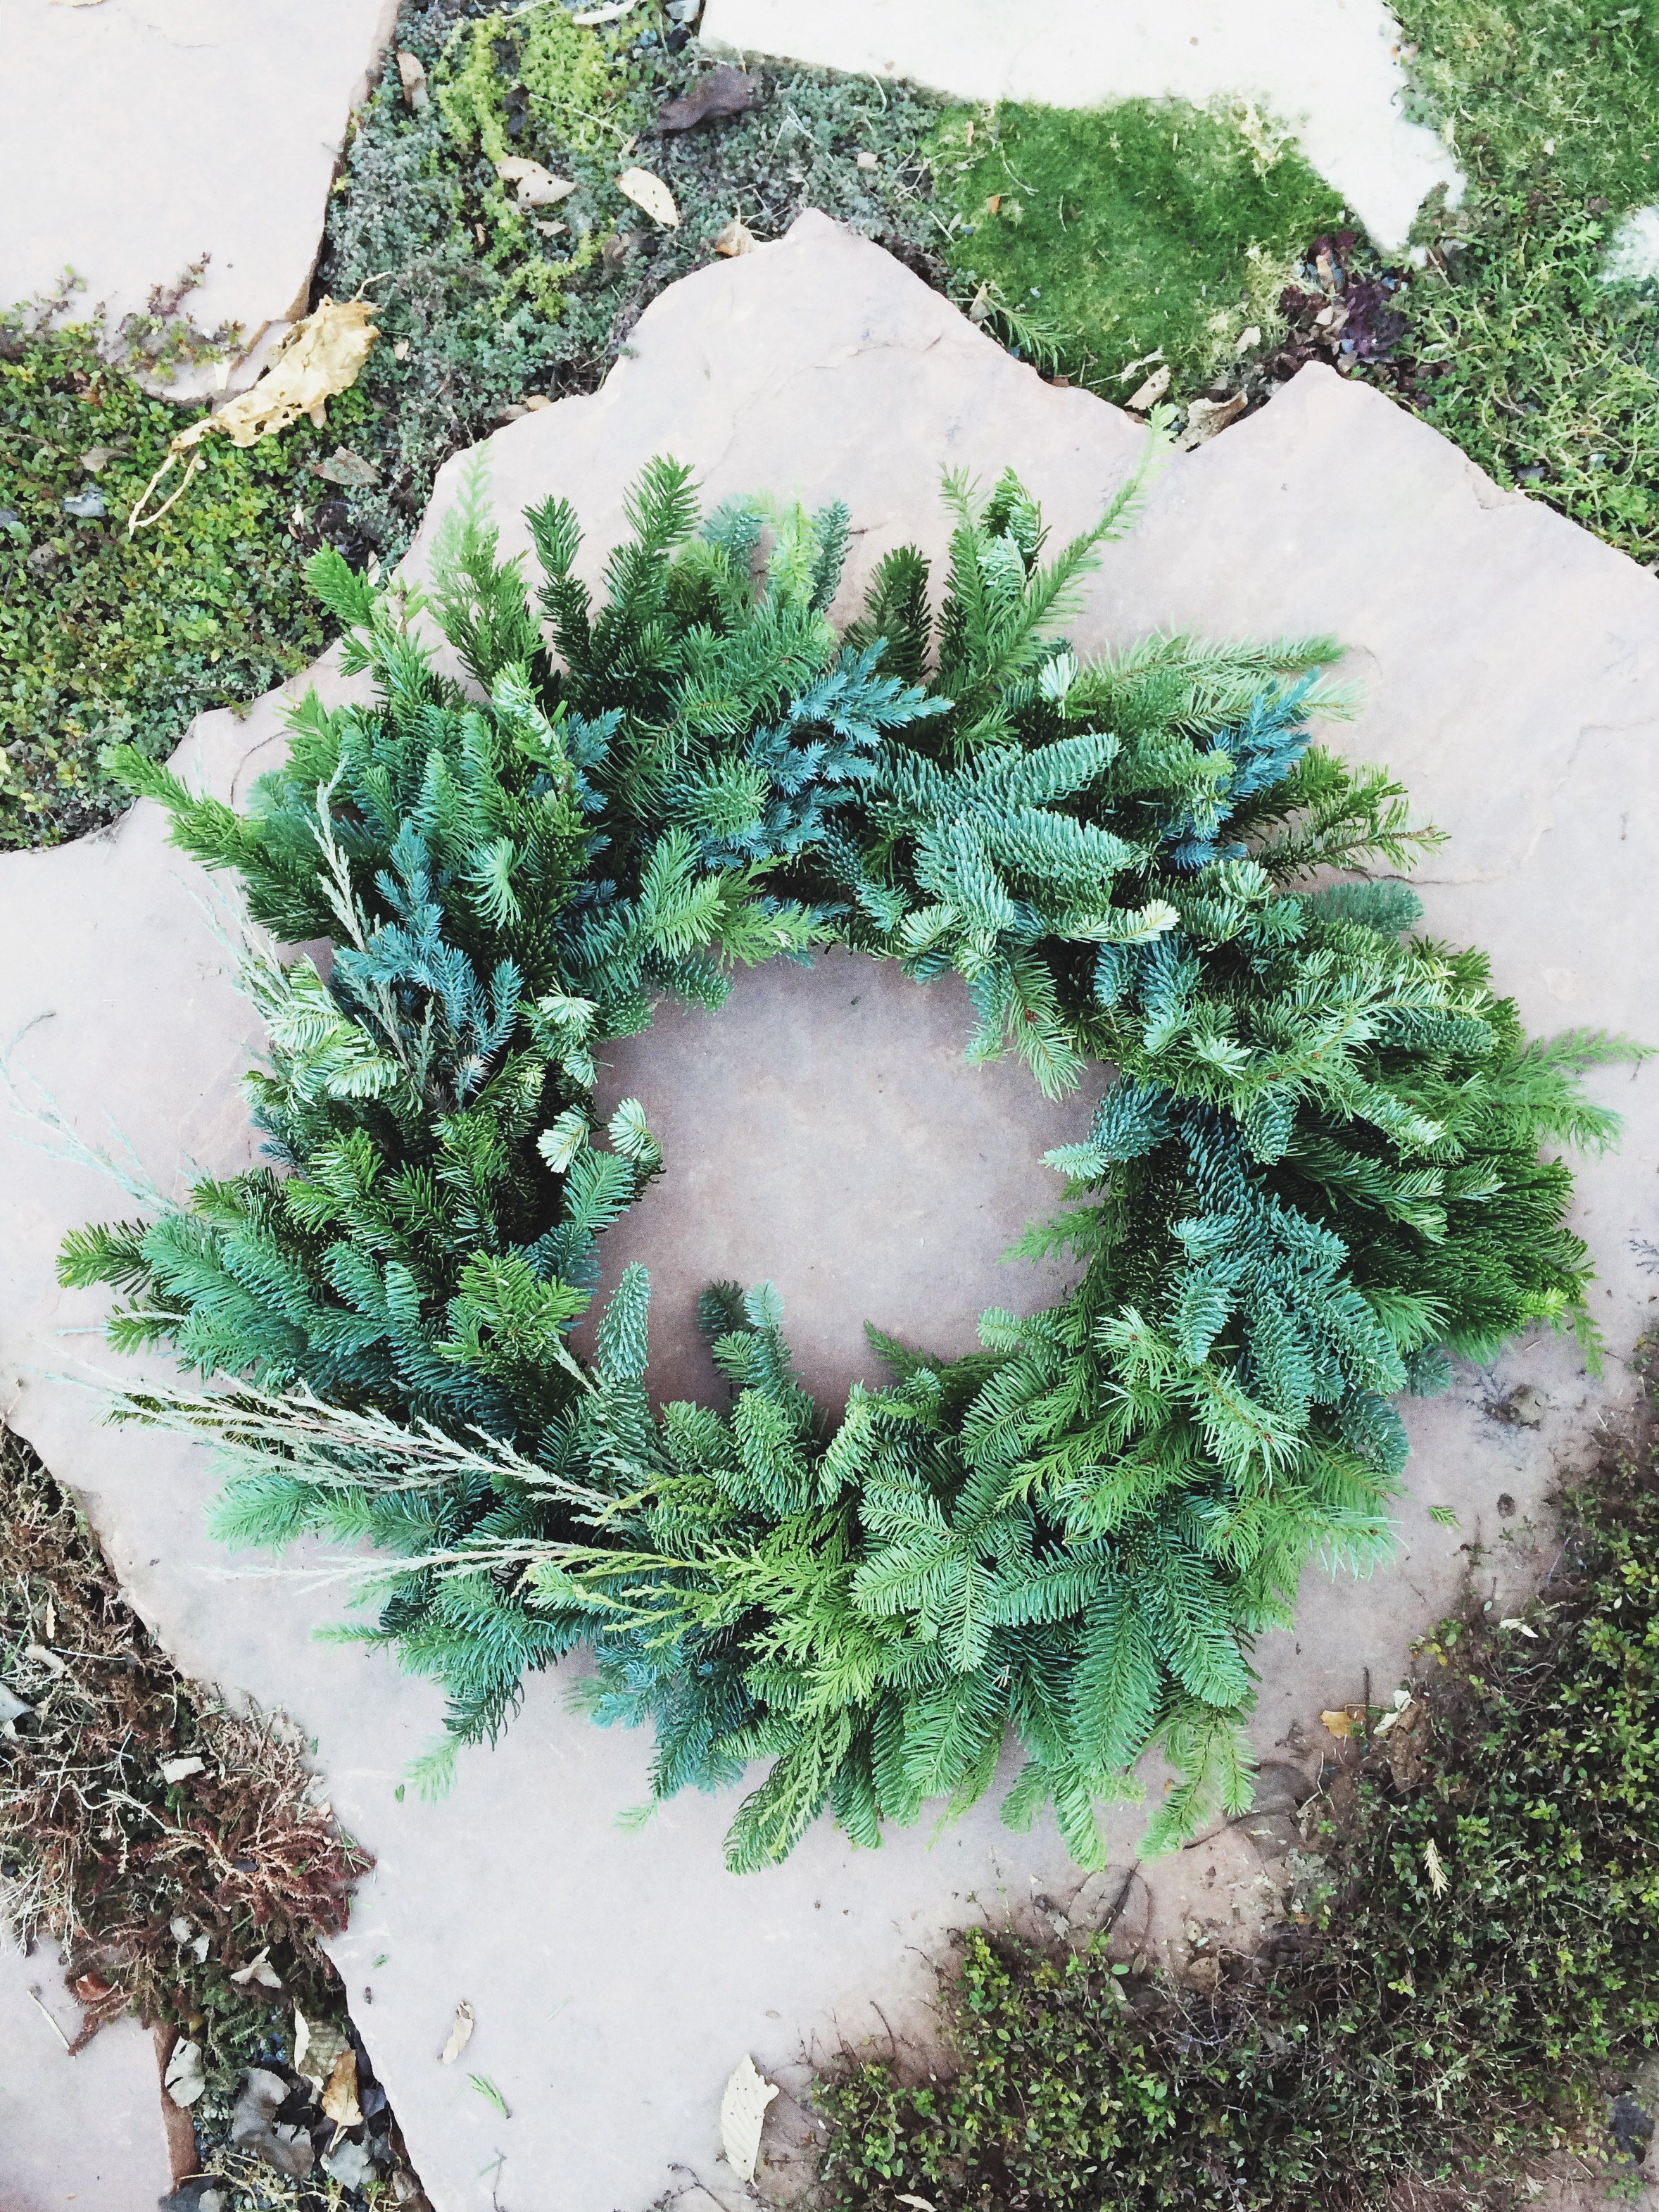 my finished DIY Christmas pine wreath